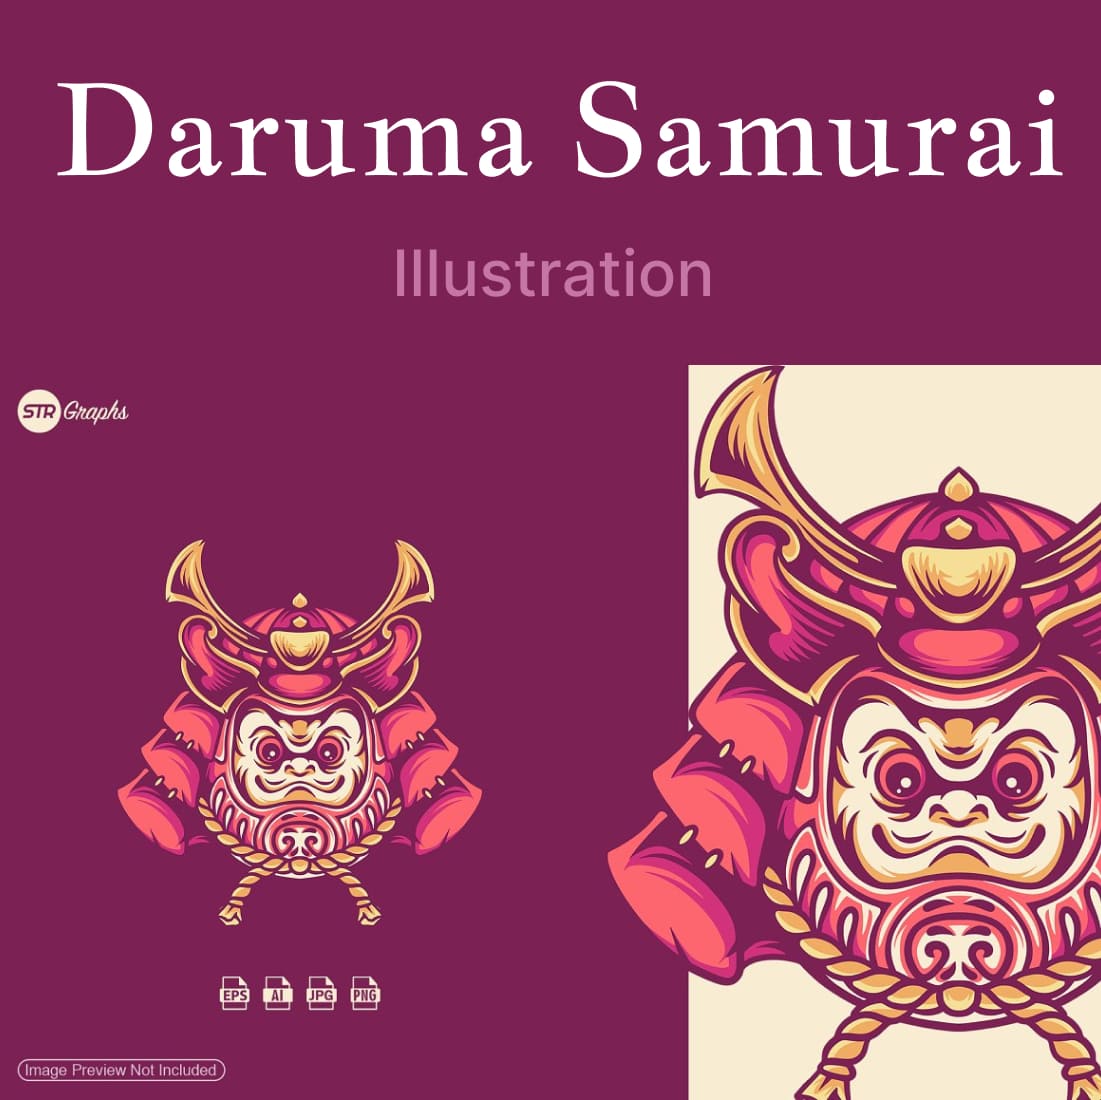 Daruma Samurai - Illustration.